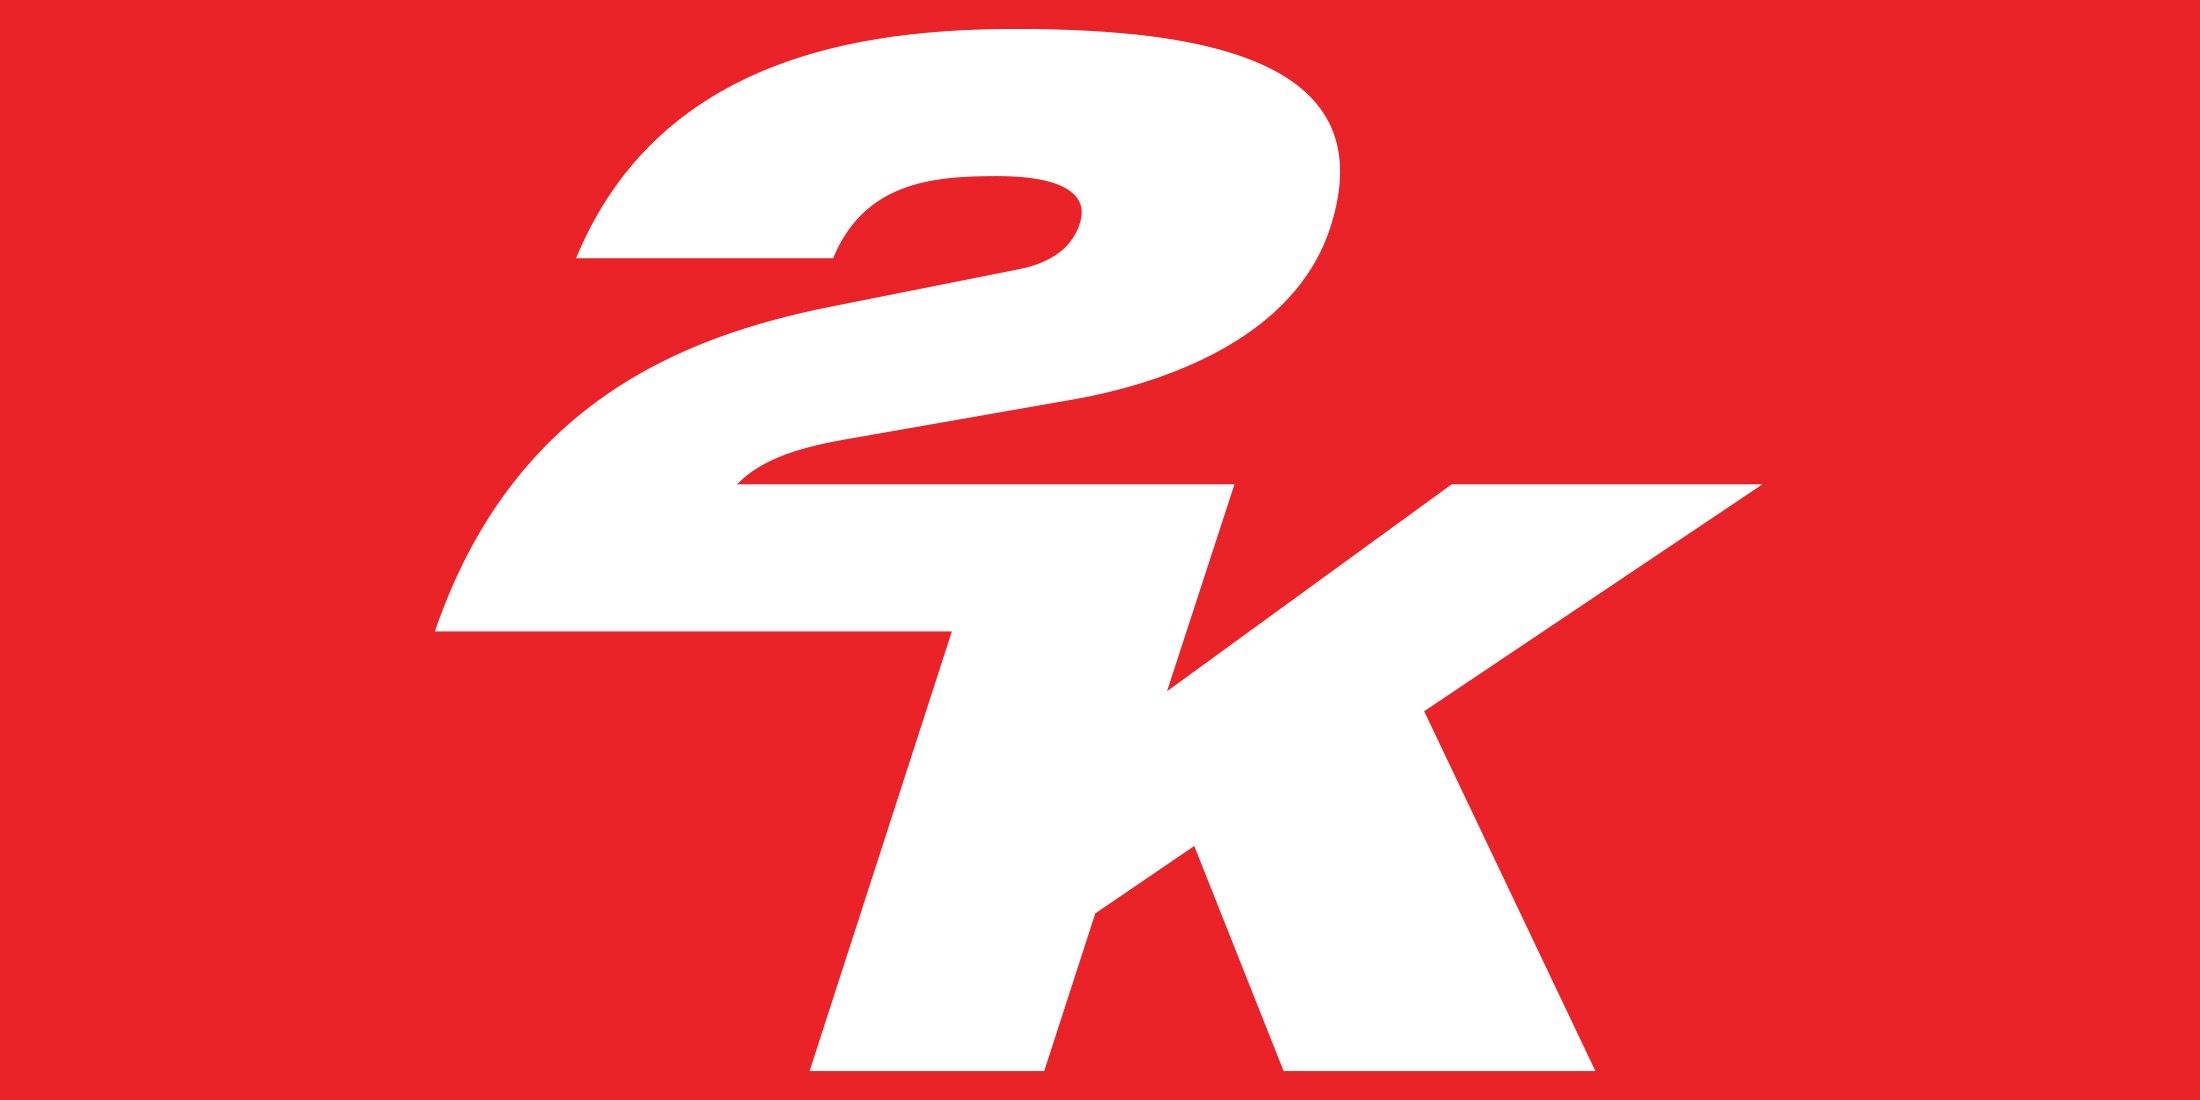 2K logo white on red 2x1 aspect ratio